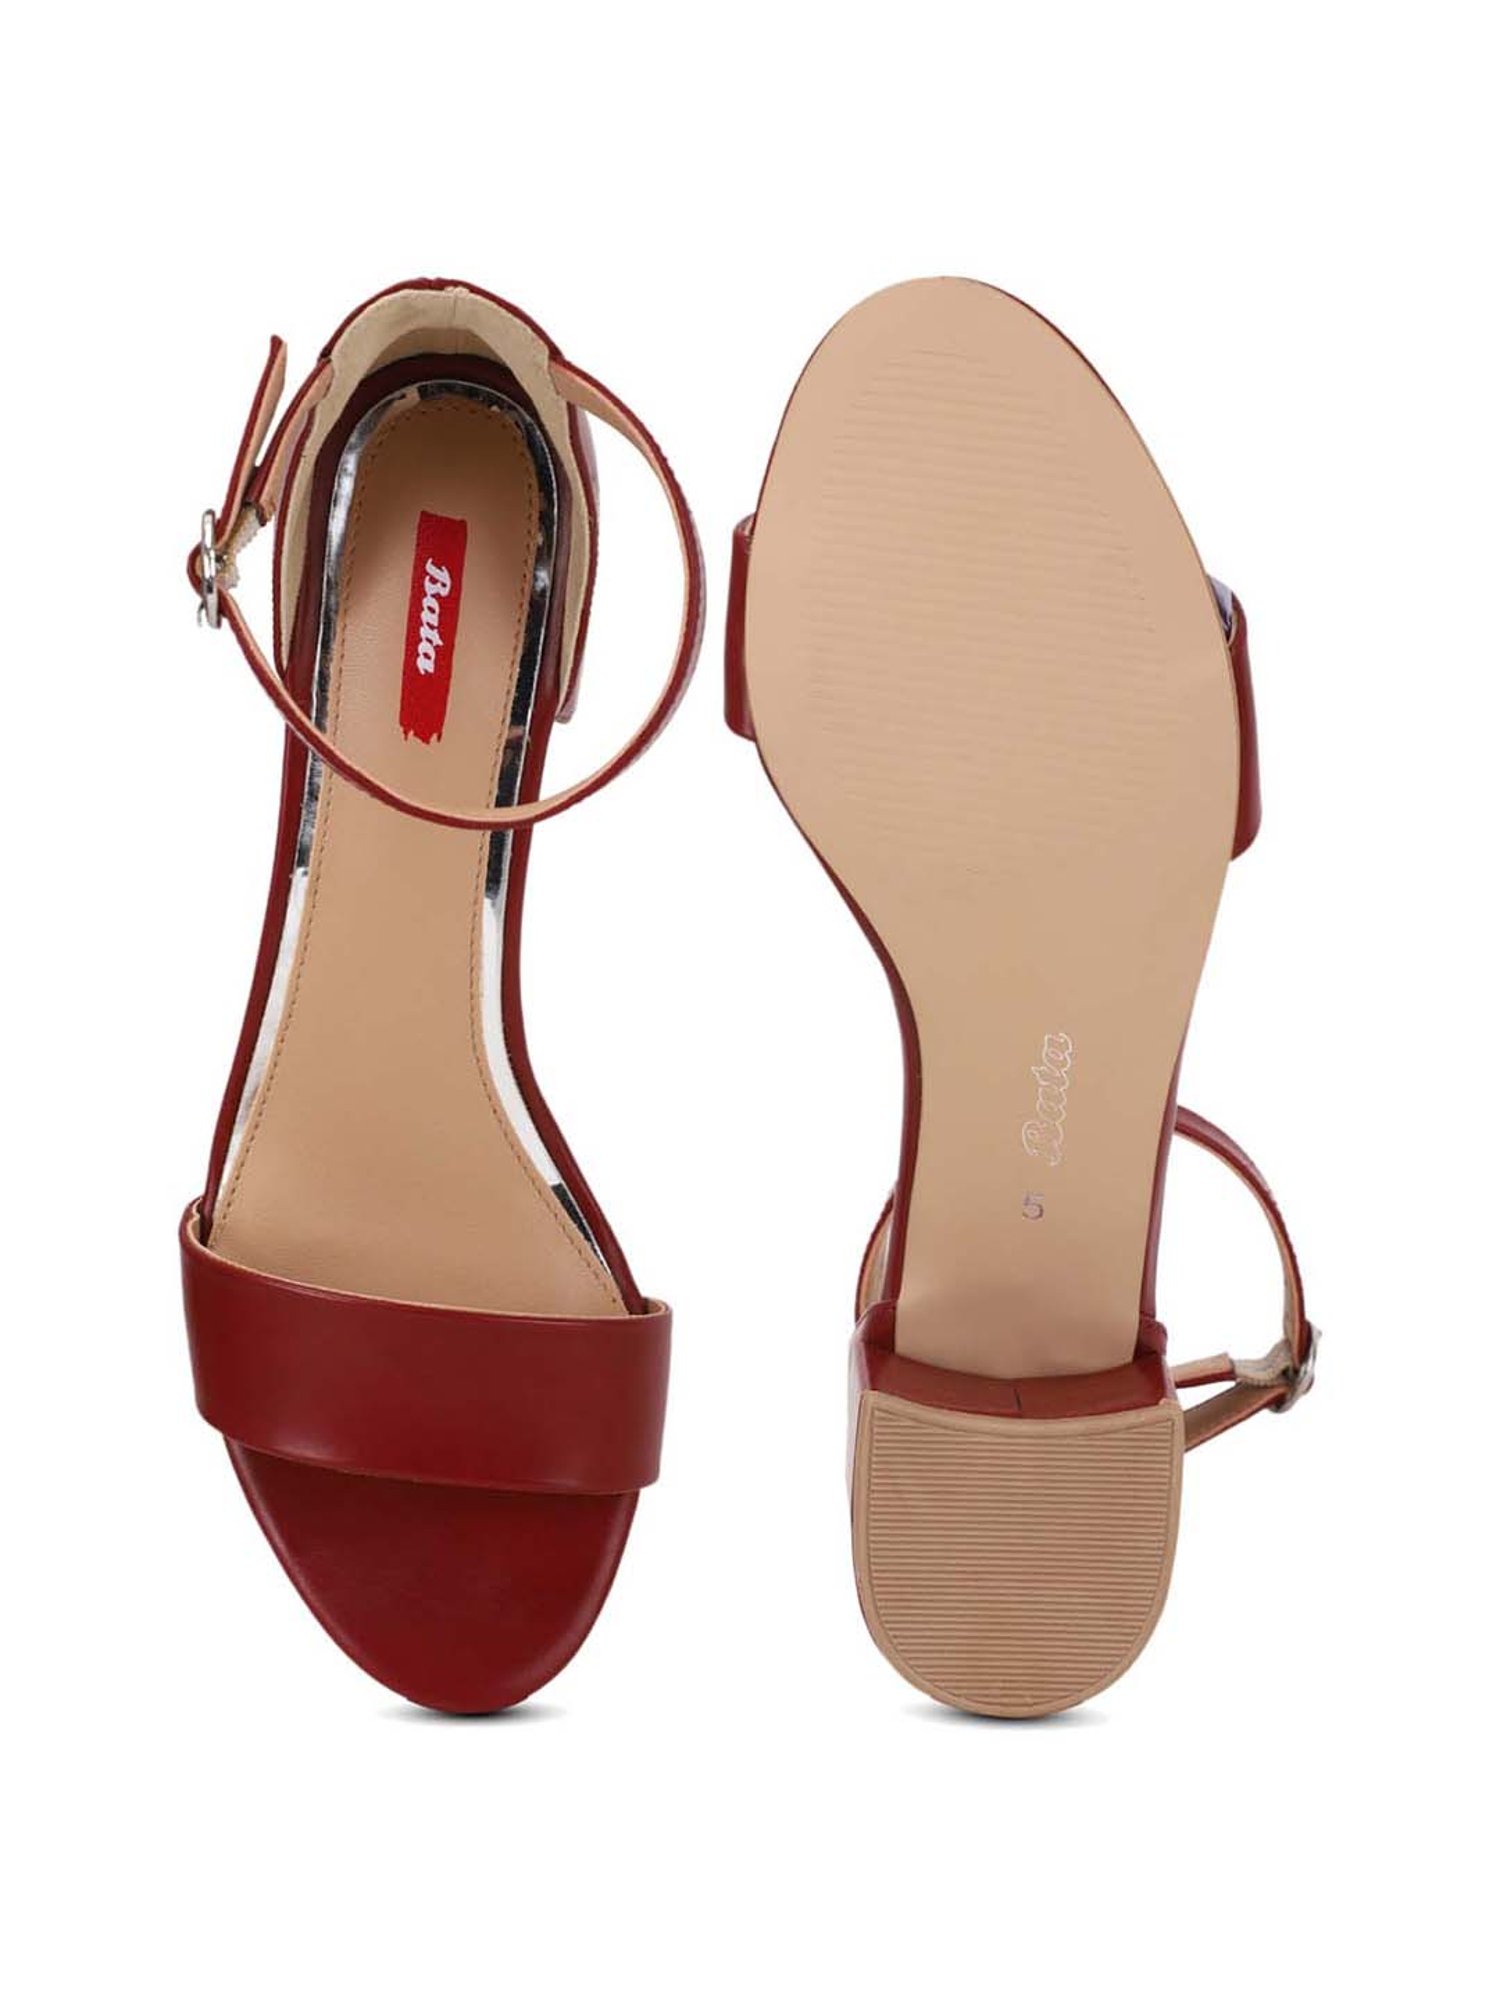 Promo BATA RED LABEL Ladies Sandals with Heels Zani - 6608329 - Cokelat, 38  Diskon 23% di Seller May ID - Sukamanah-2, Kota Tasikmalaya | Blibli